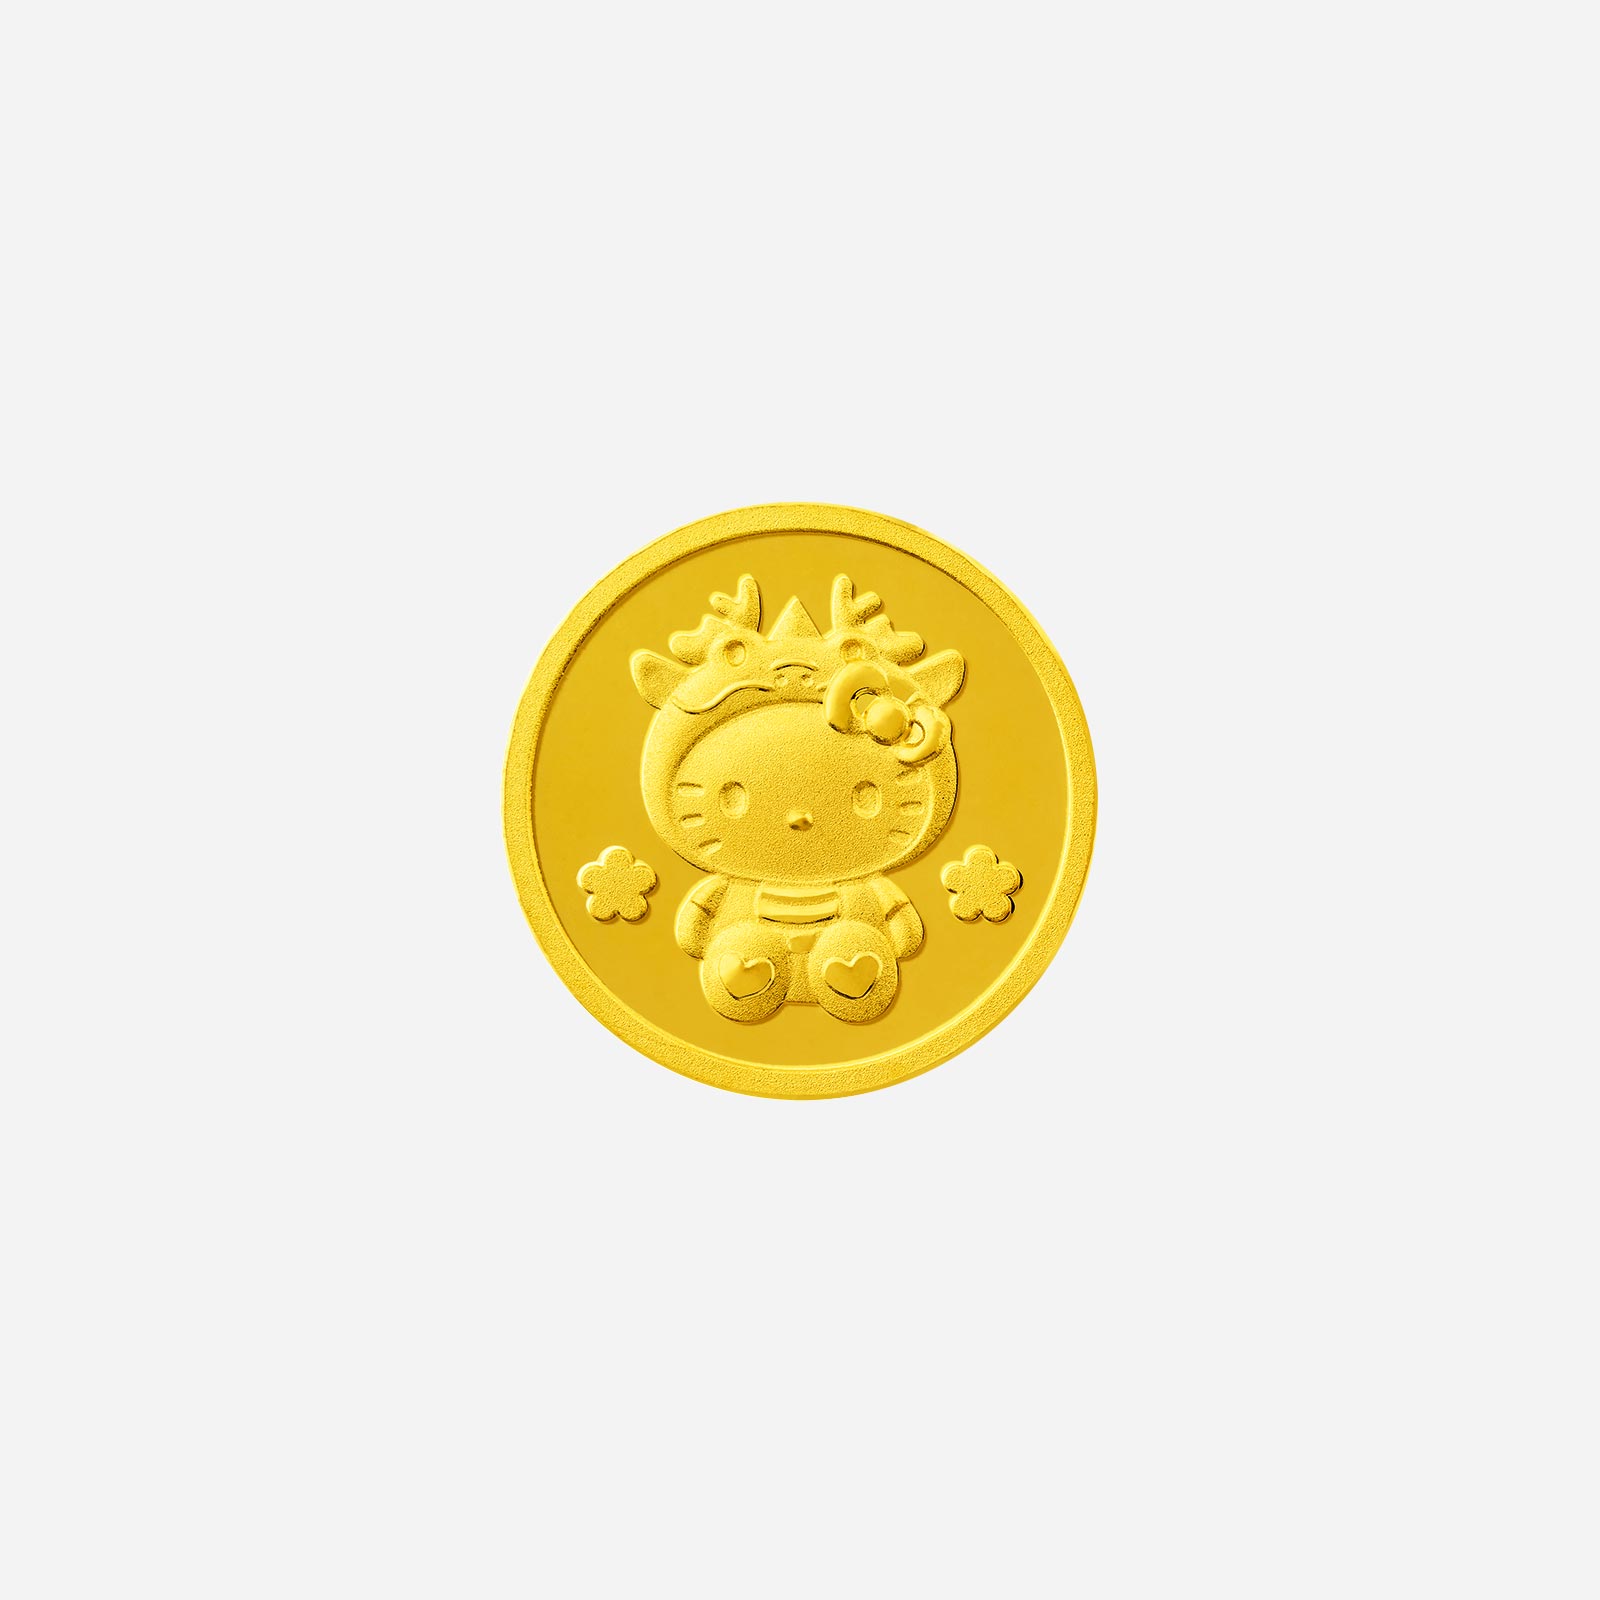 Poh Heng Hello Kitty Dragon Medallion in 24K Yellow Gold	